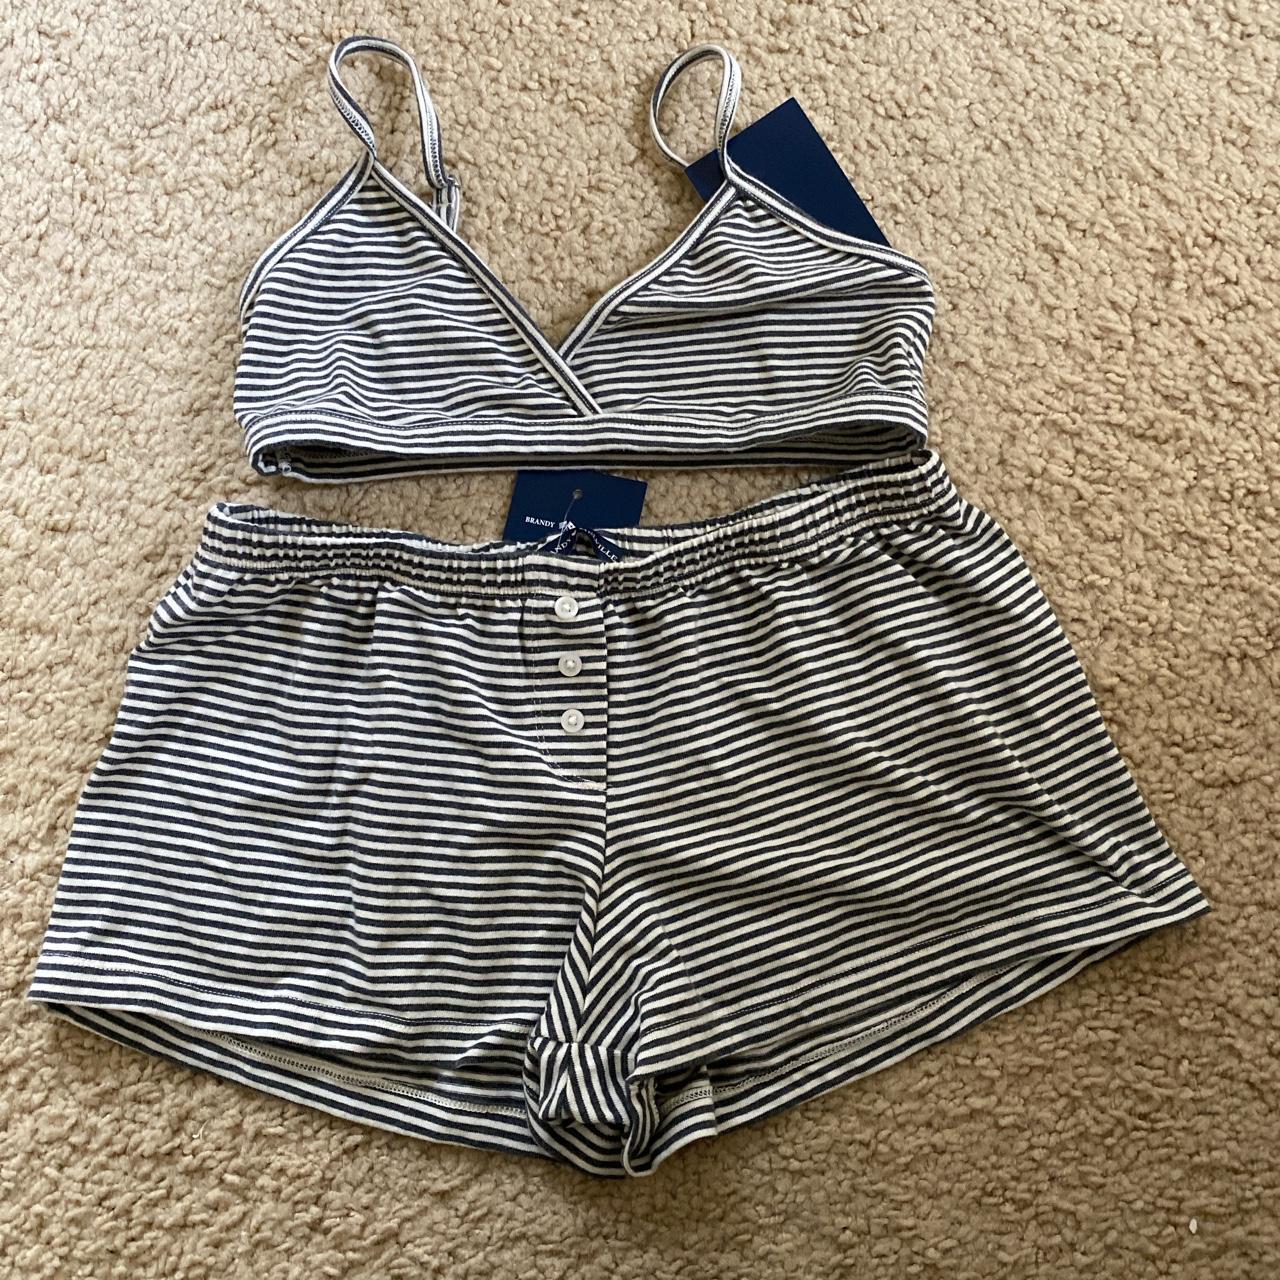 Brandy Melville polina striped bar top/Keira shorts set - Depop